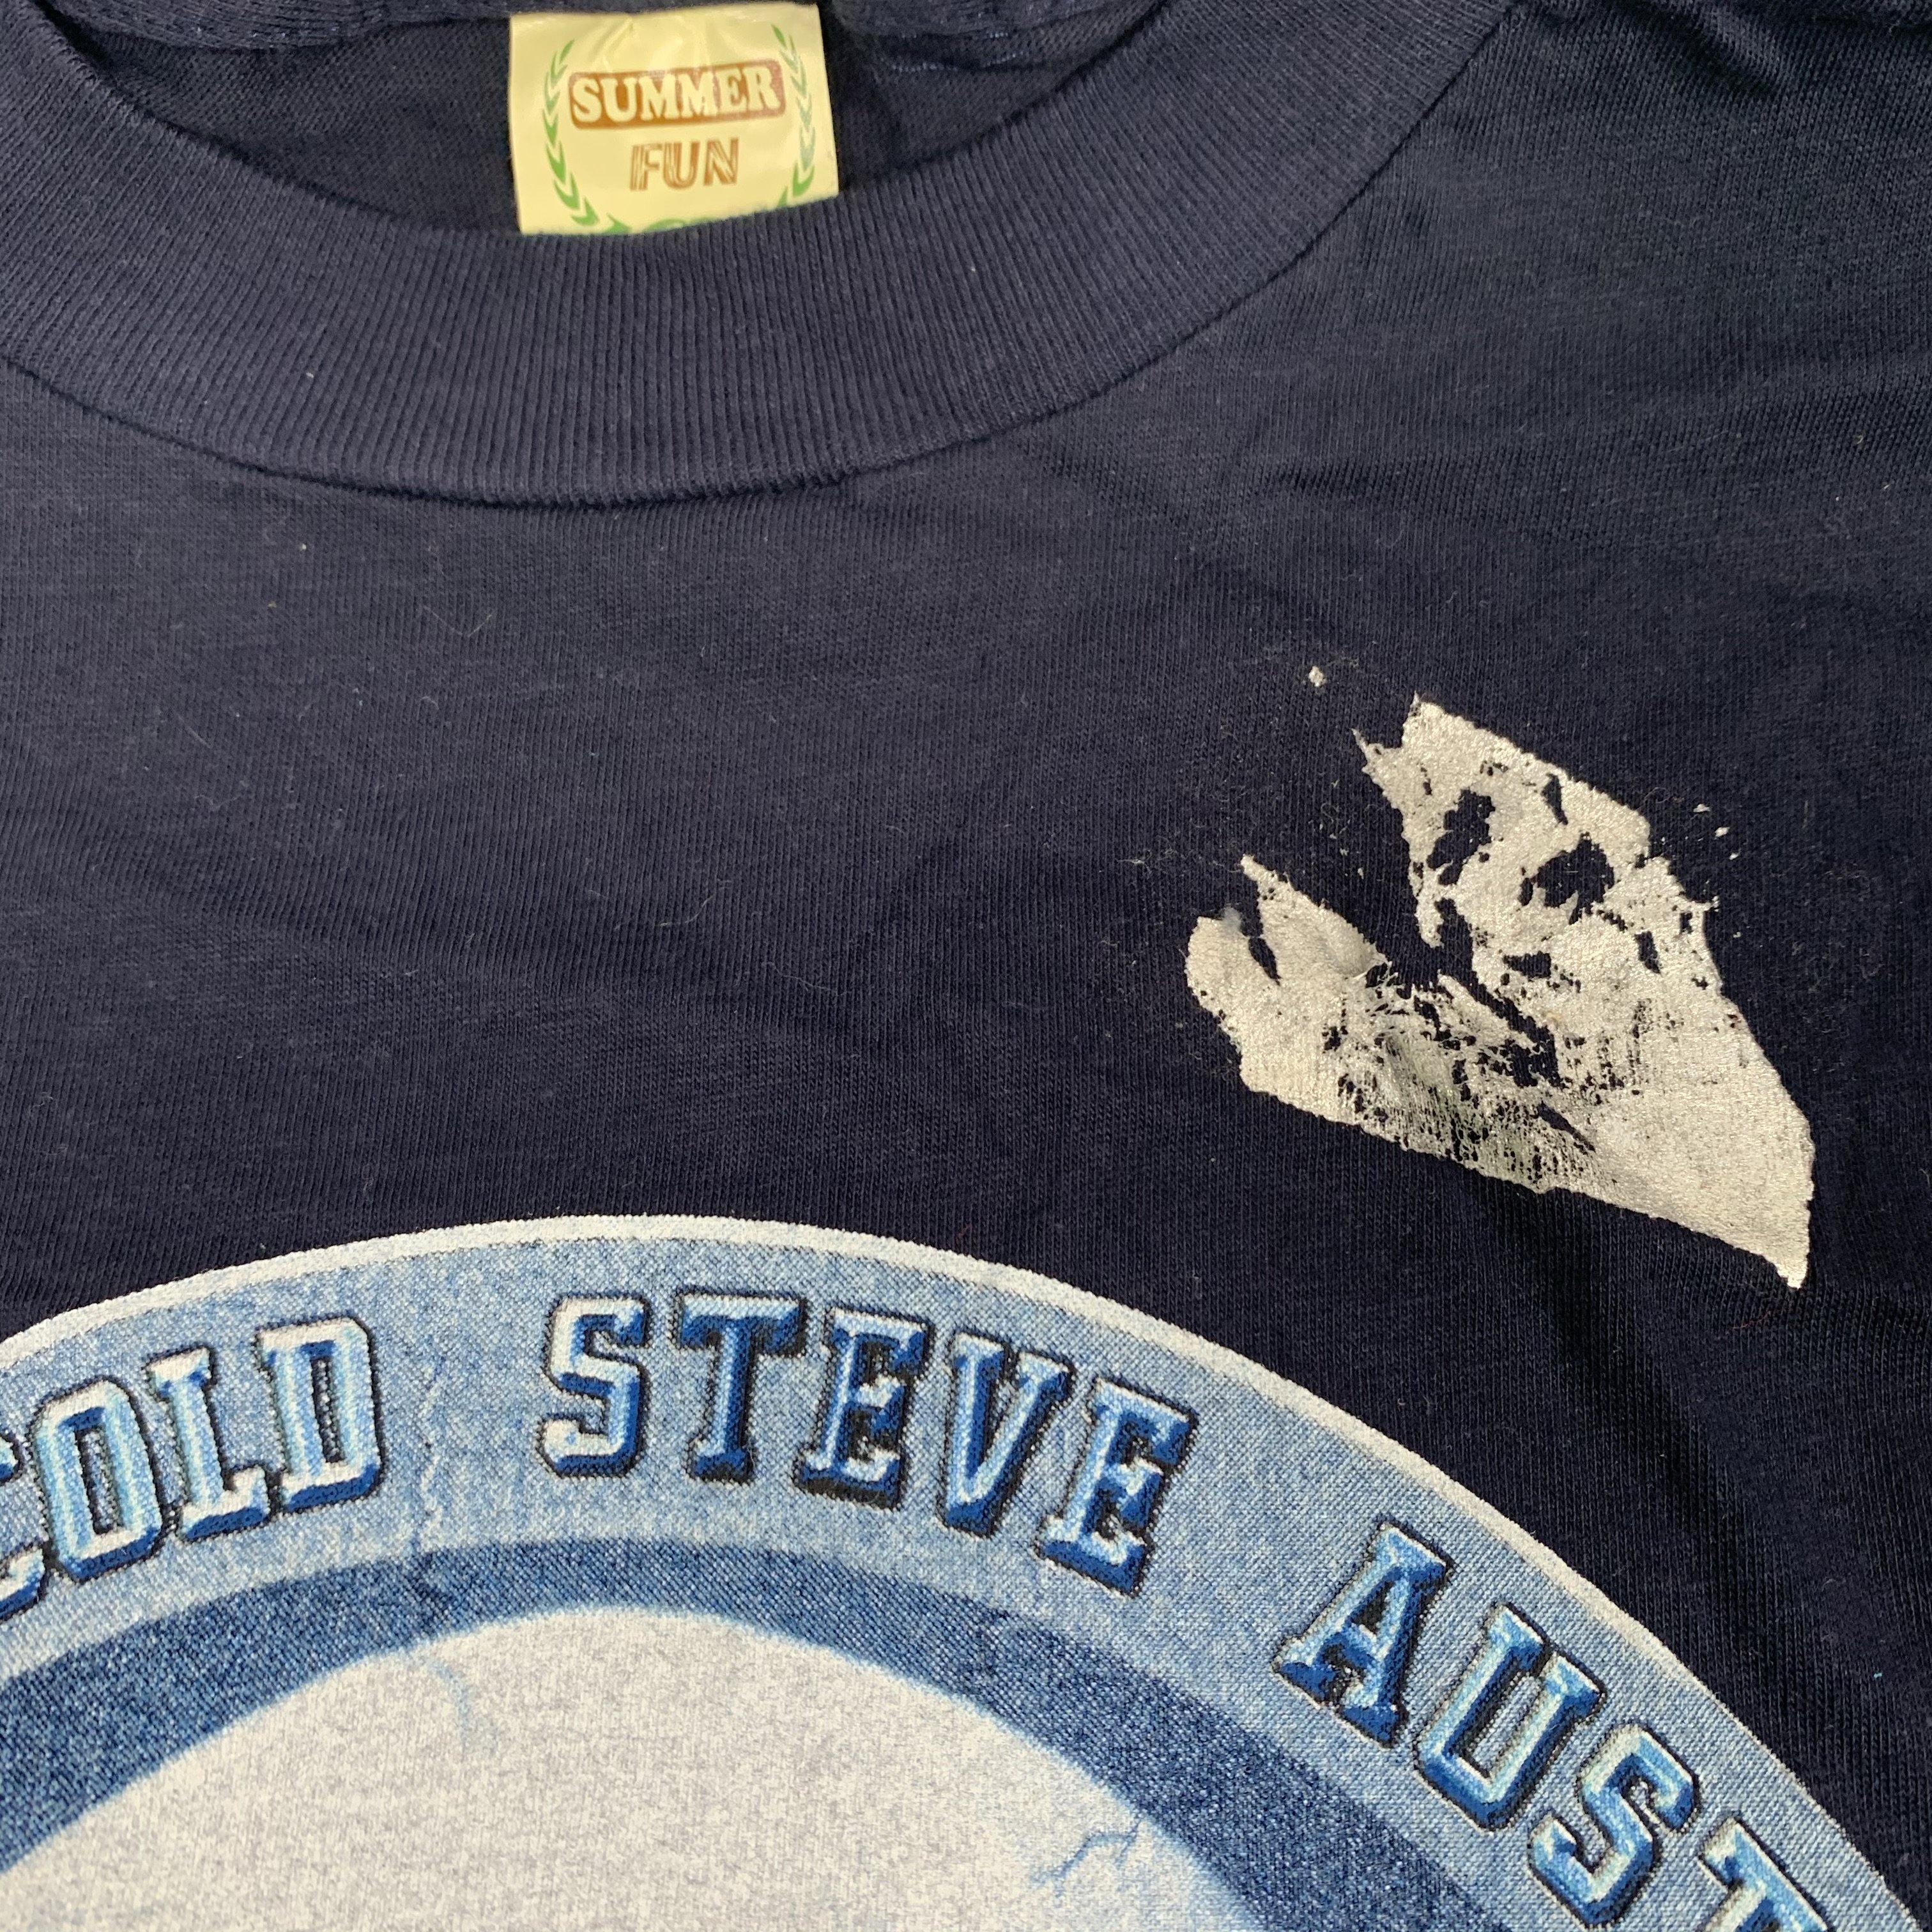 Stone Cold Steve Austin 3 16 Shirt - Limotees